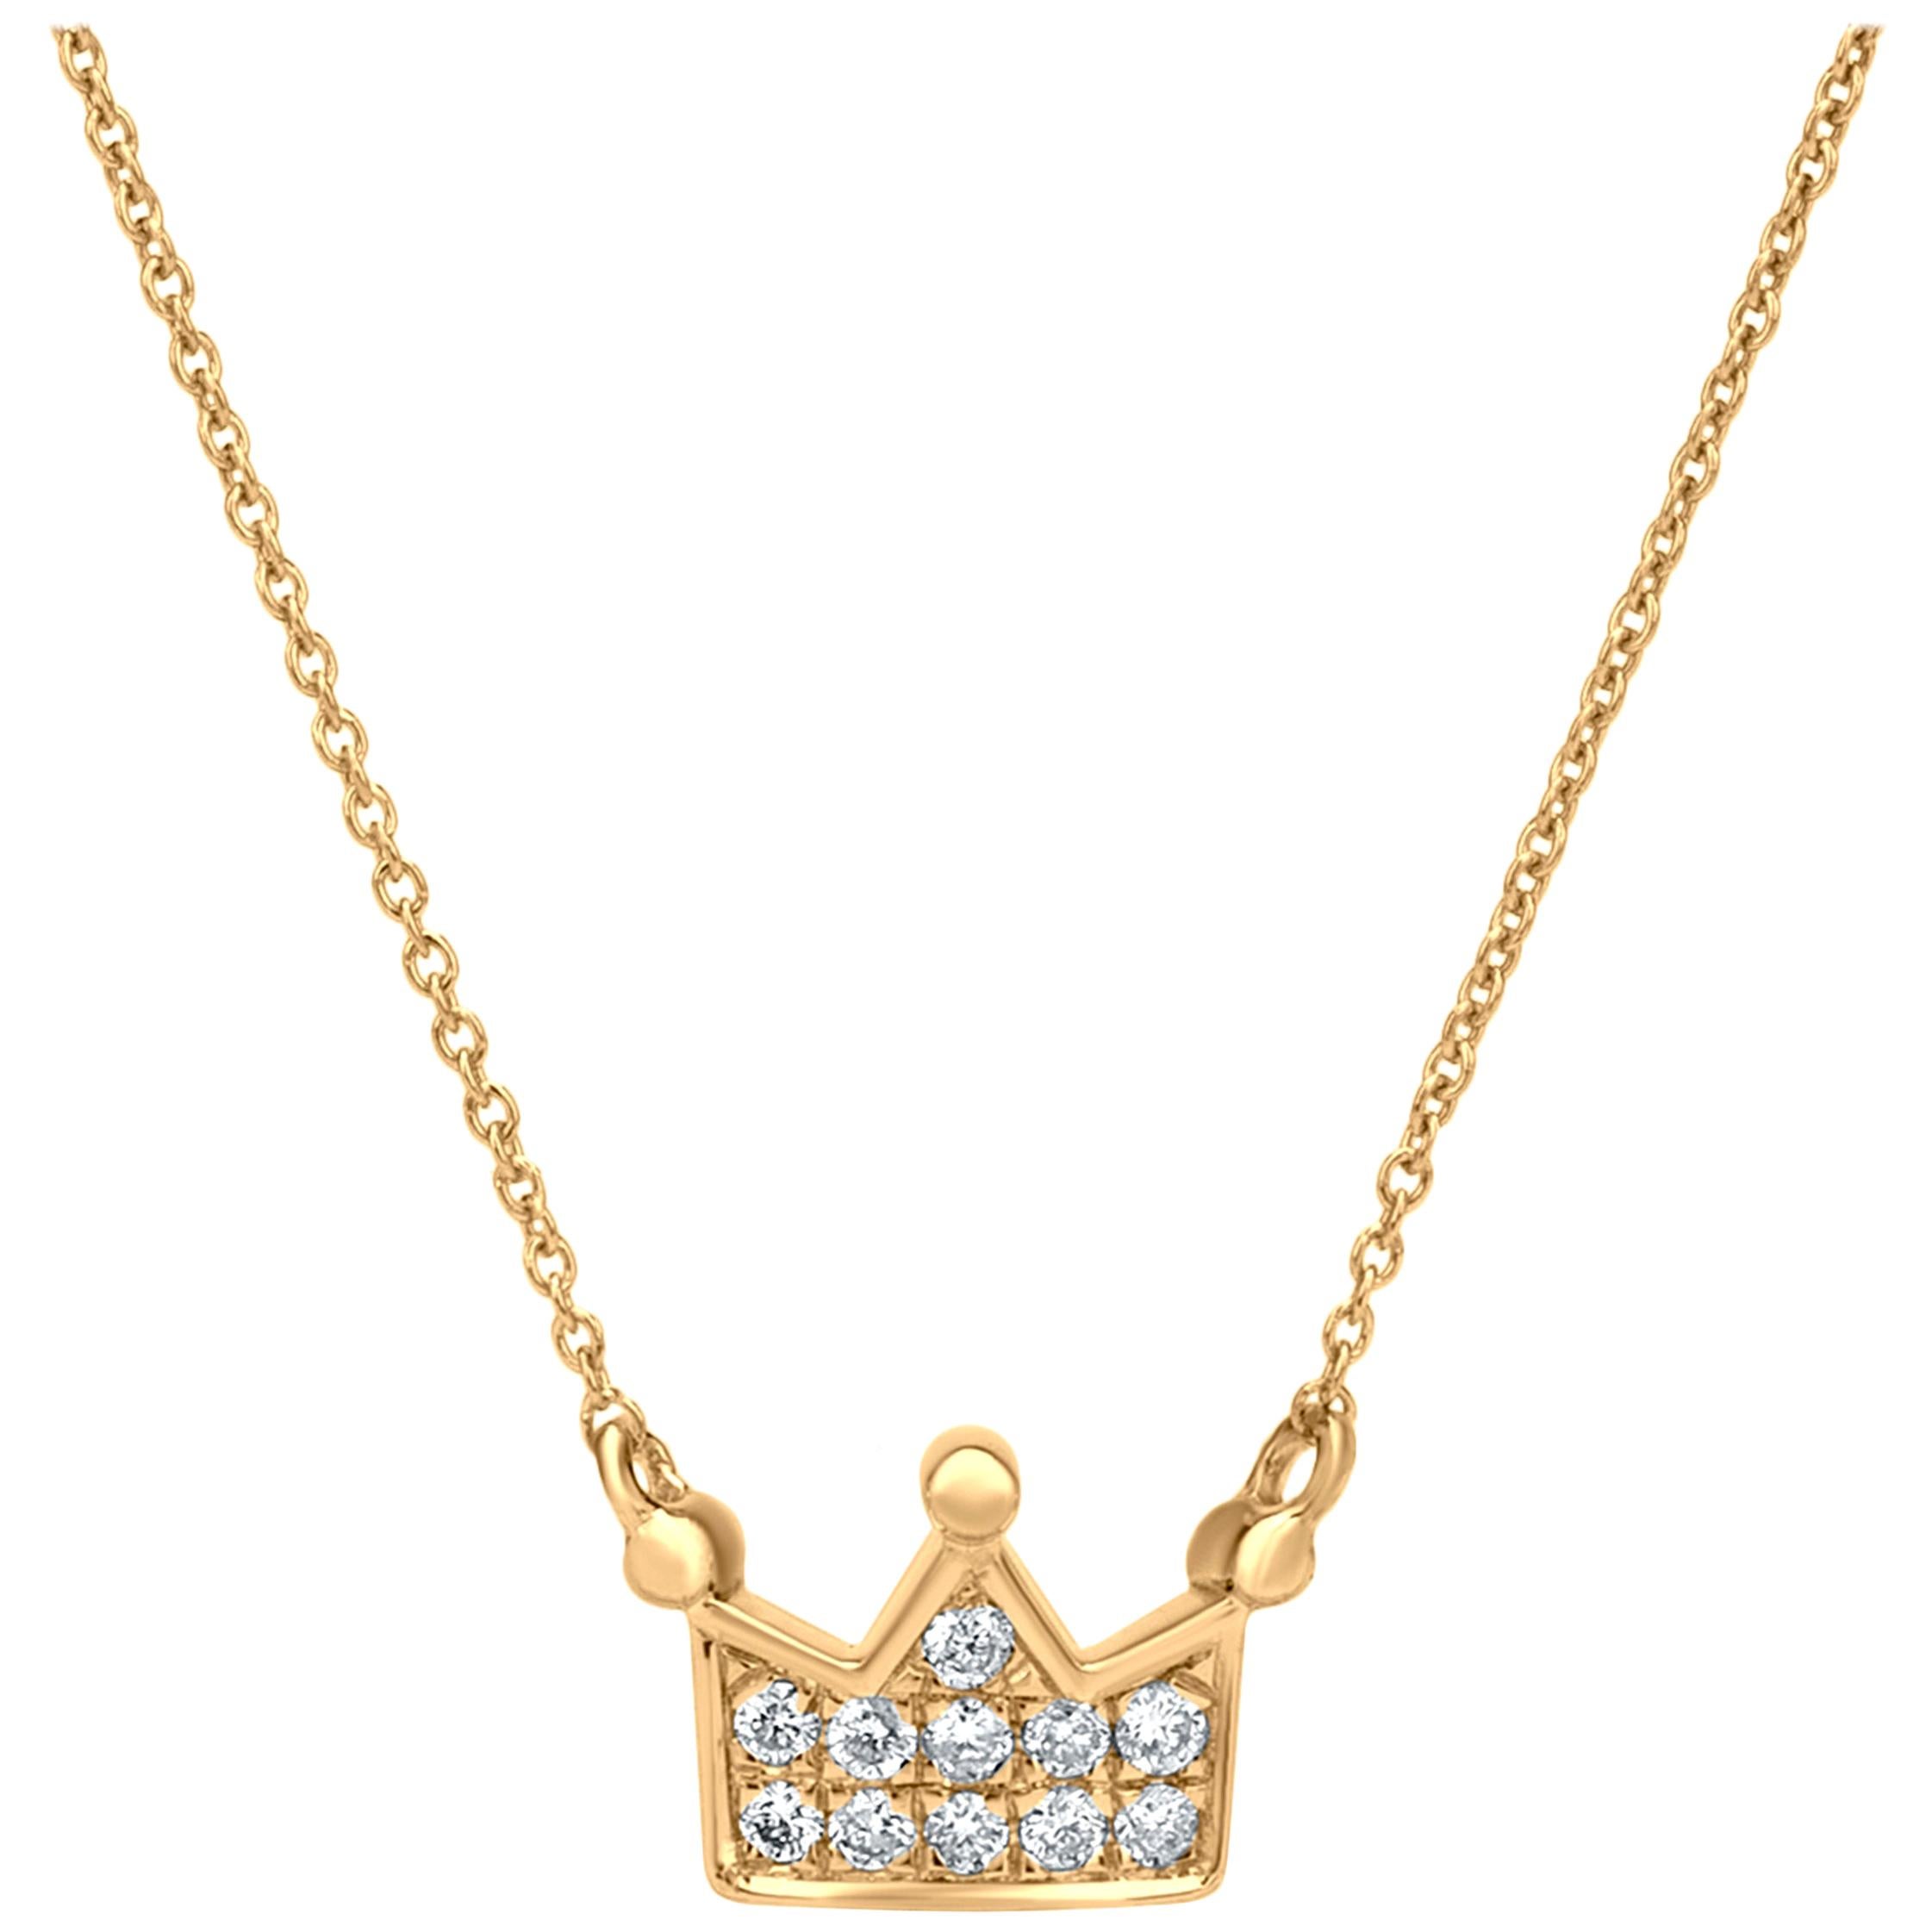 Luxle Crown Diamond Pendant Necklace in 18K Yellow Gold